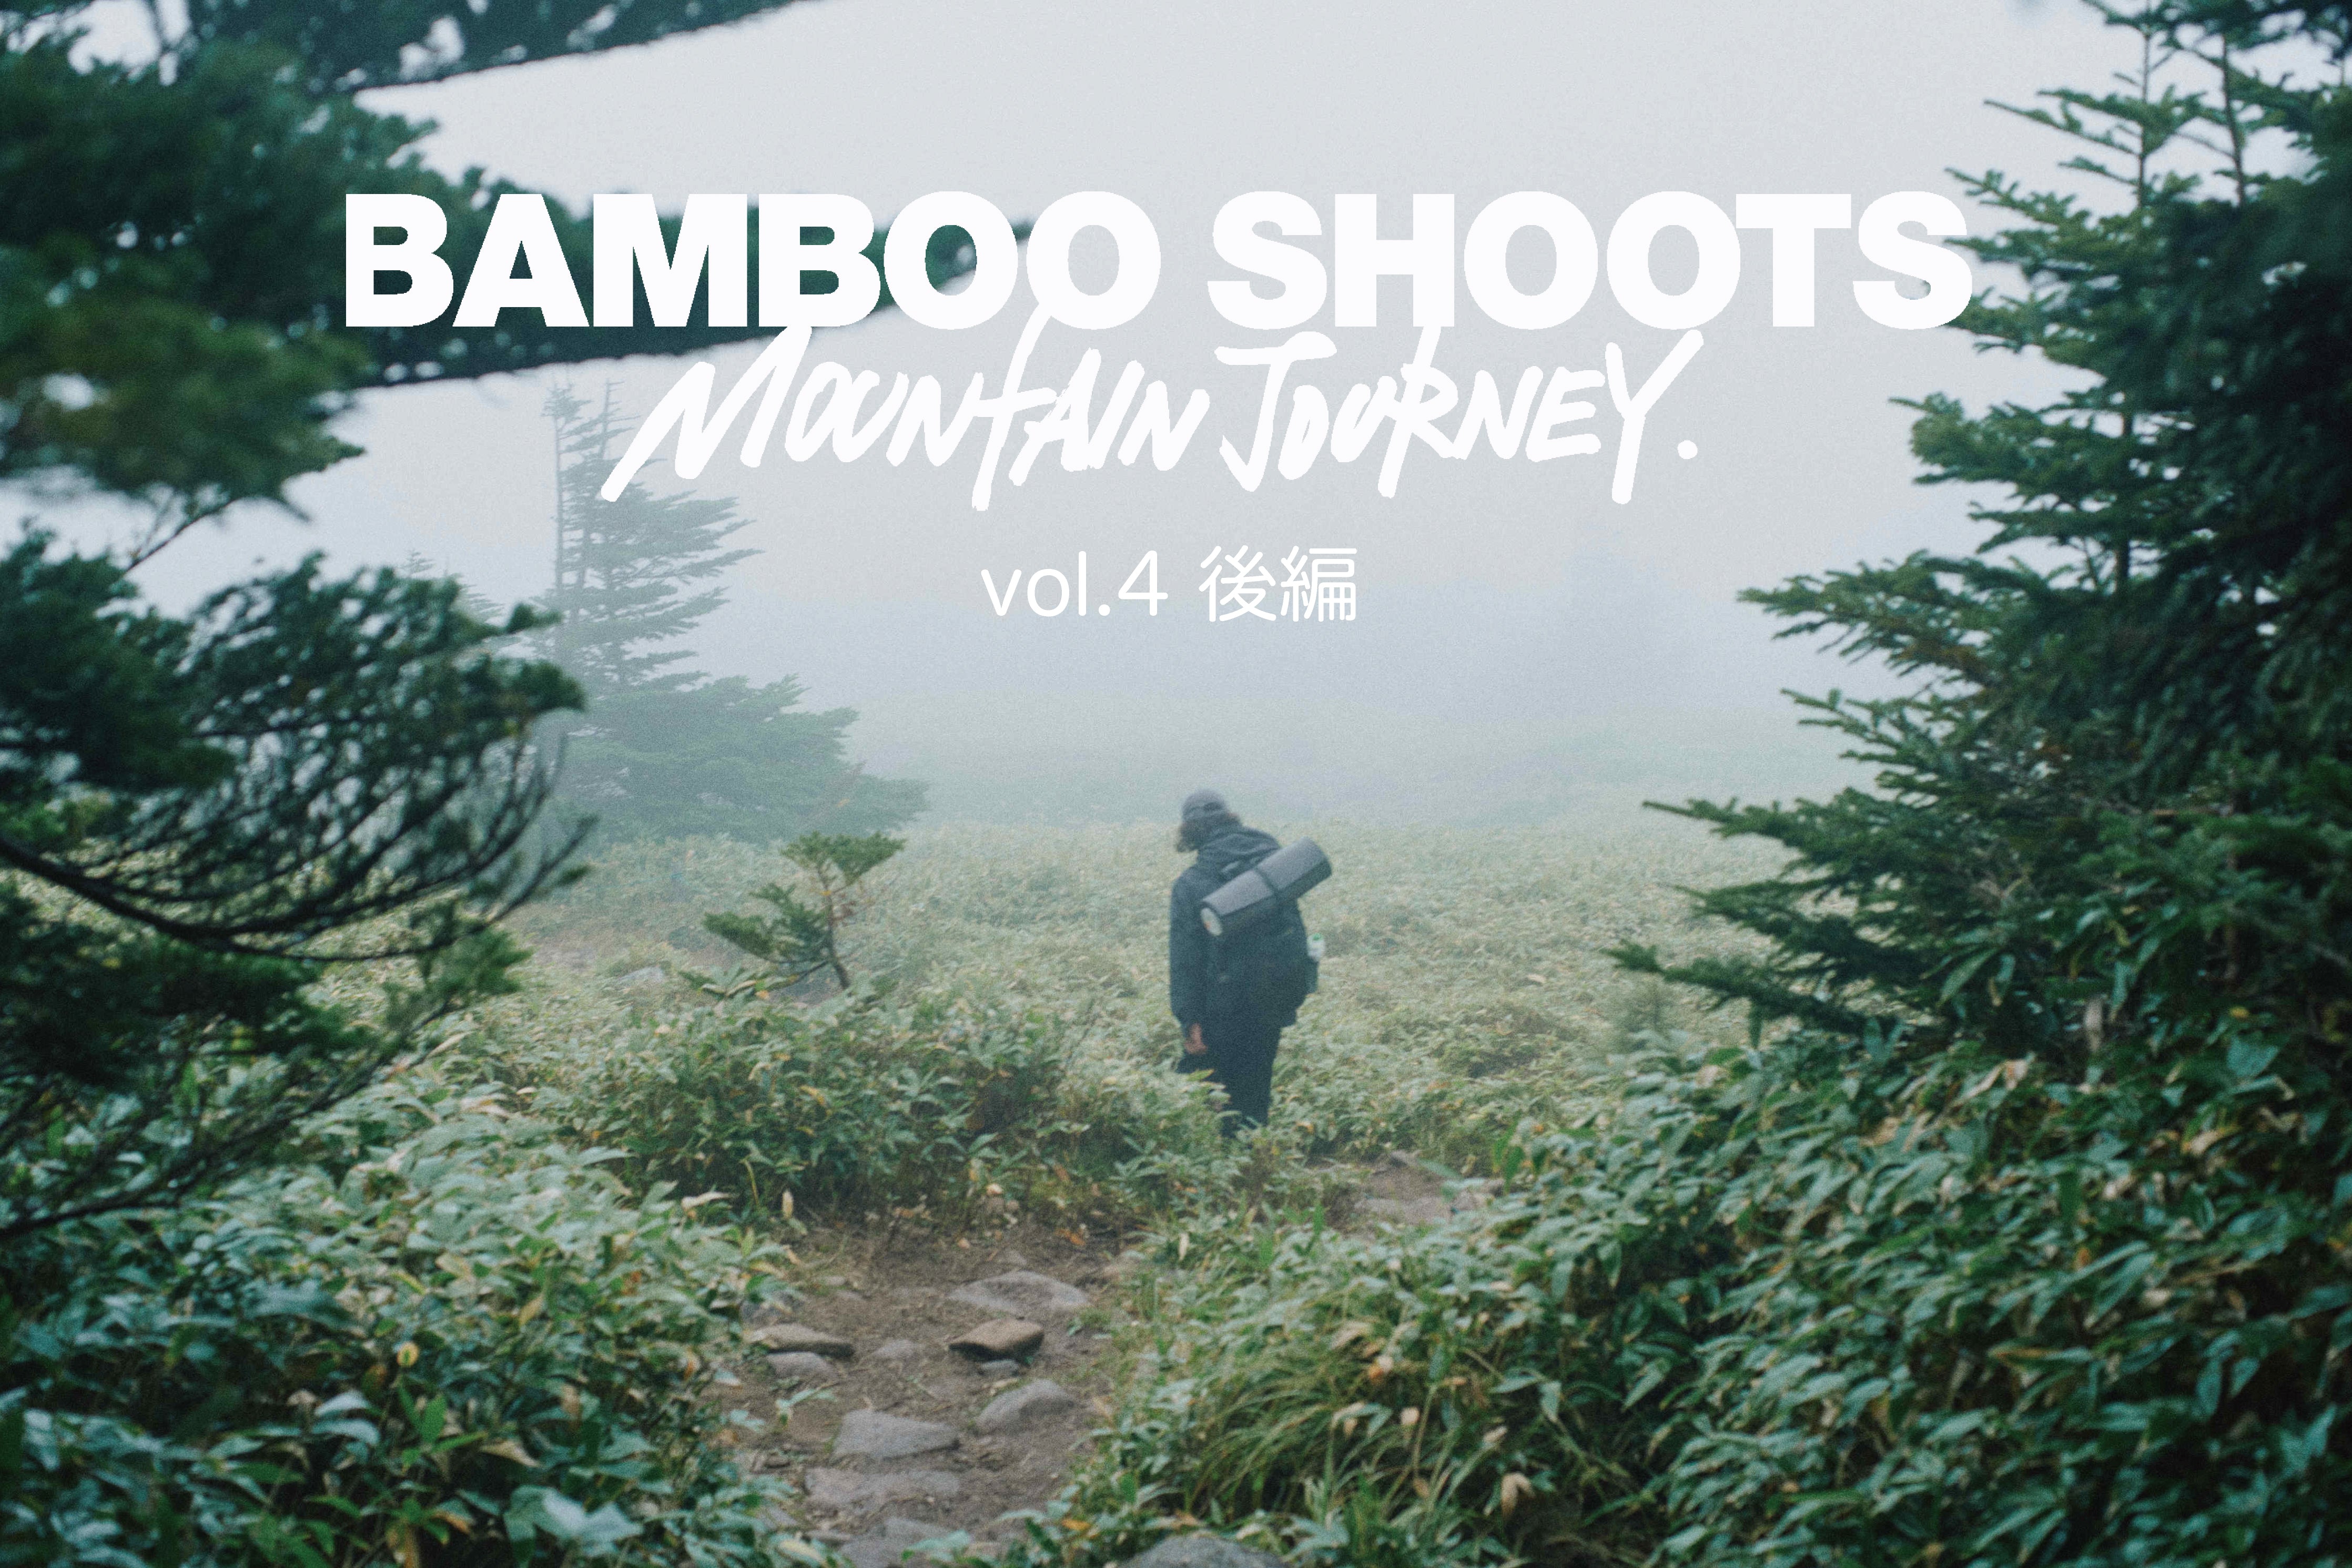 BAMBOO SHOOTS MOUNTAIN JOURNEY vol.4 – BAMBOO SHOOTS ONLINE